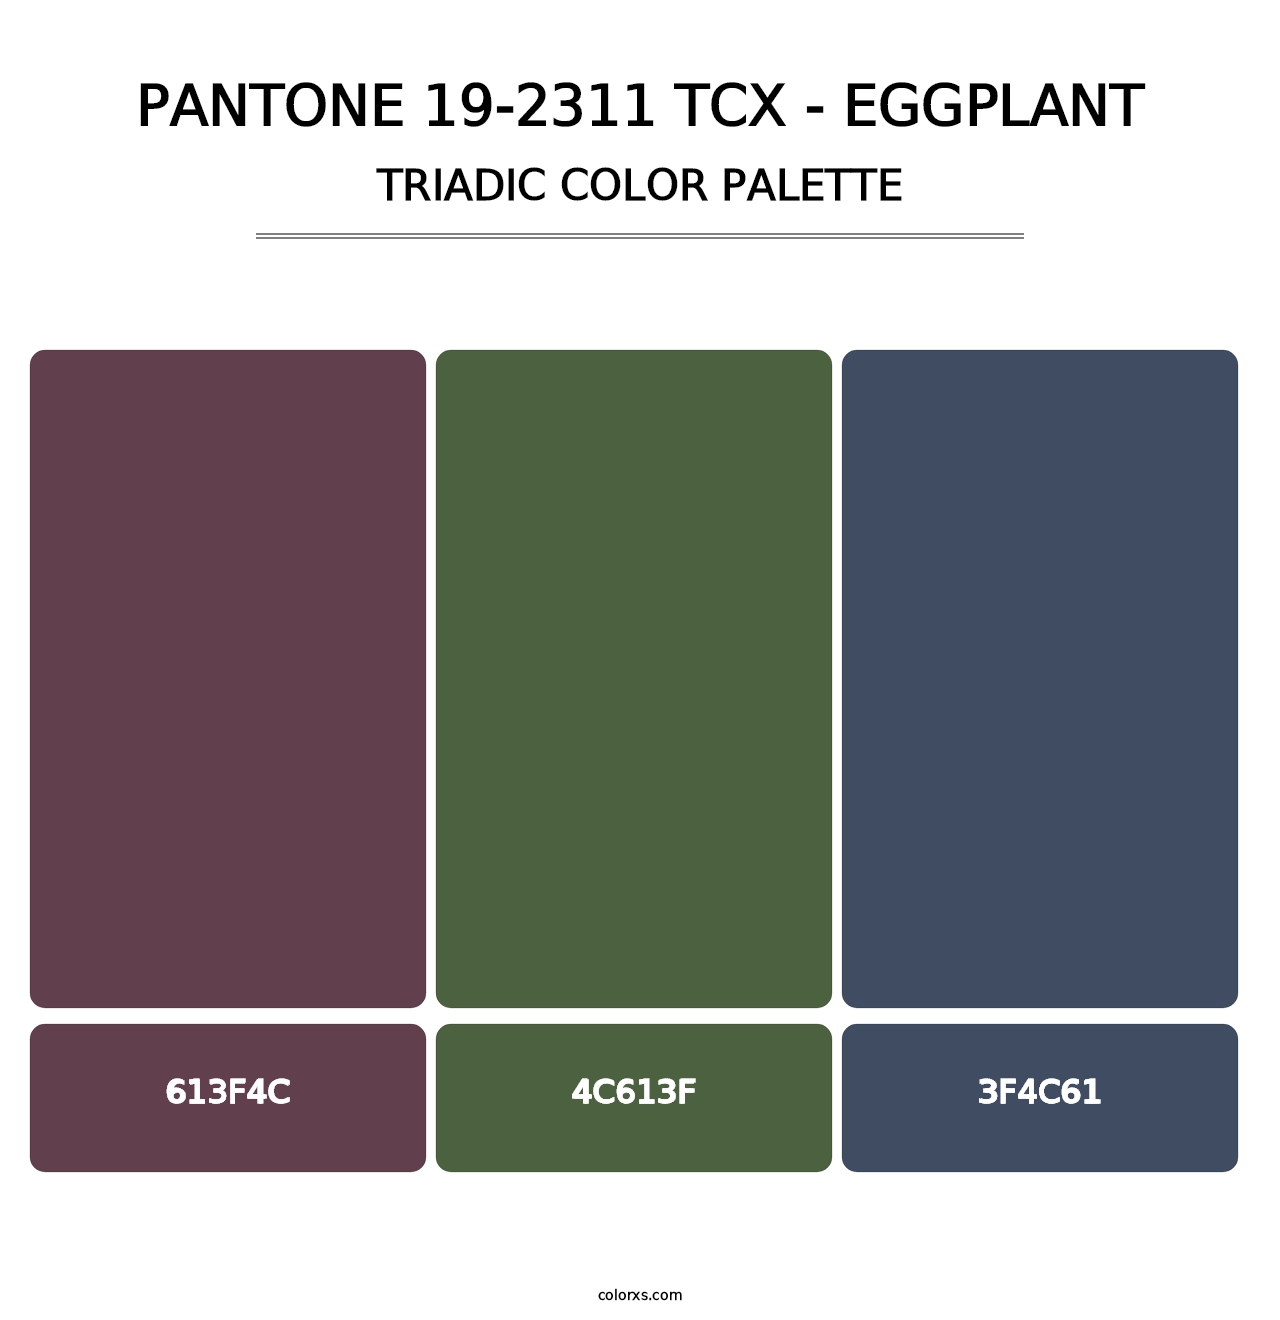 PANTONE 19-2311 TCX - Eggplant - Triadic Color Palette